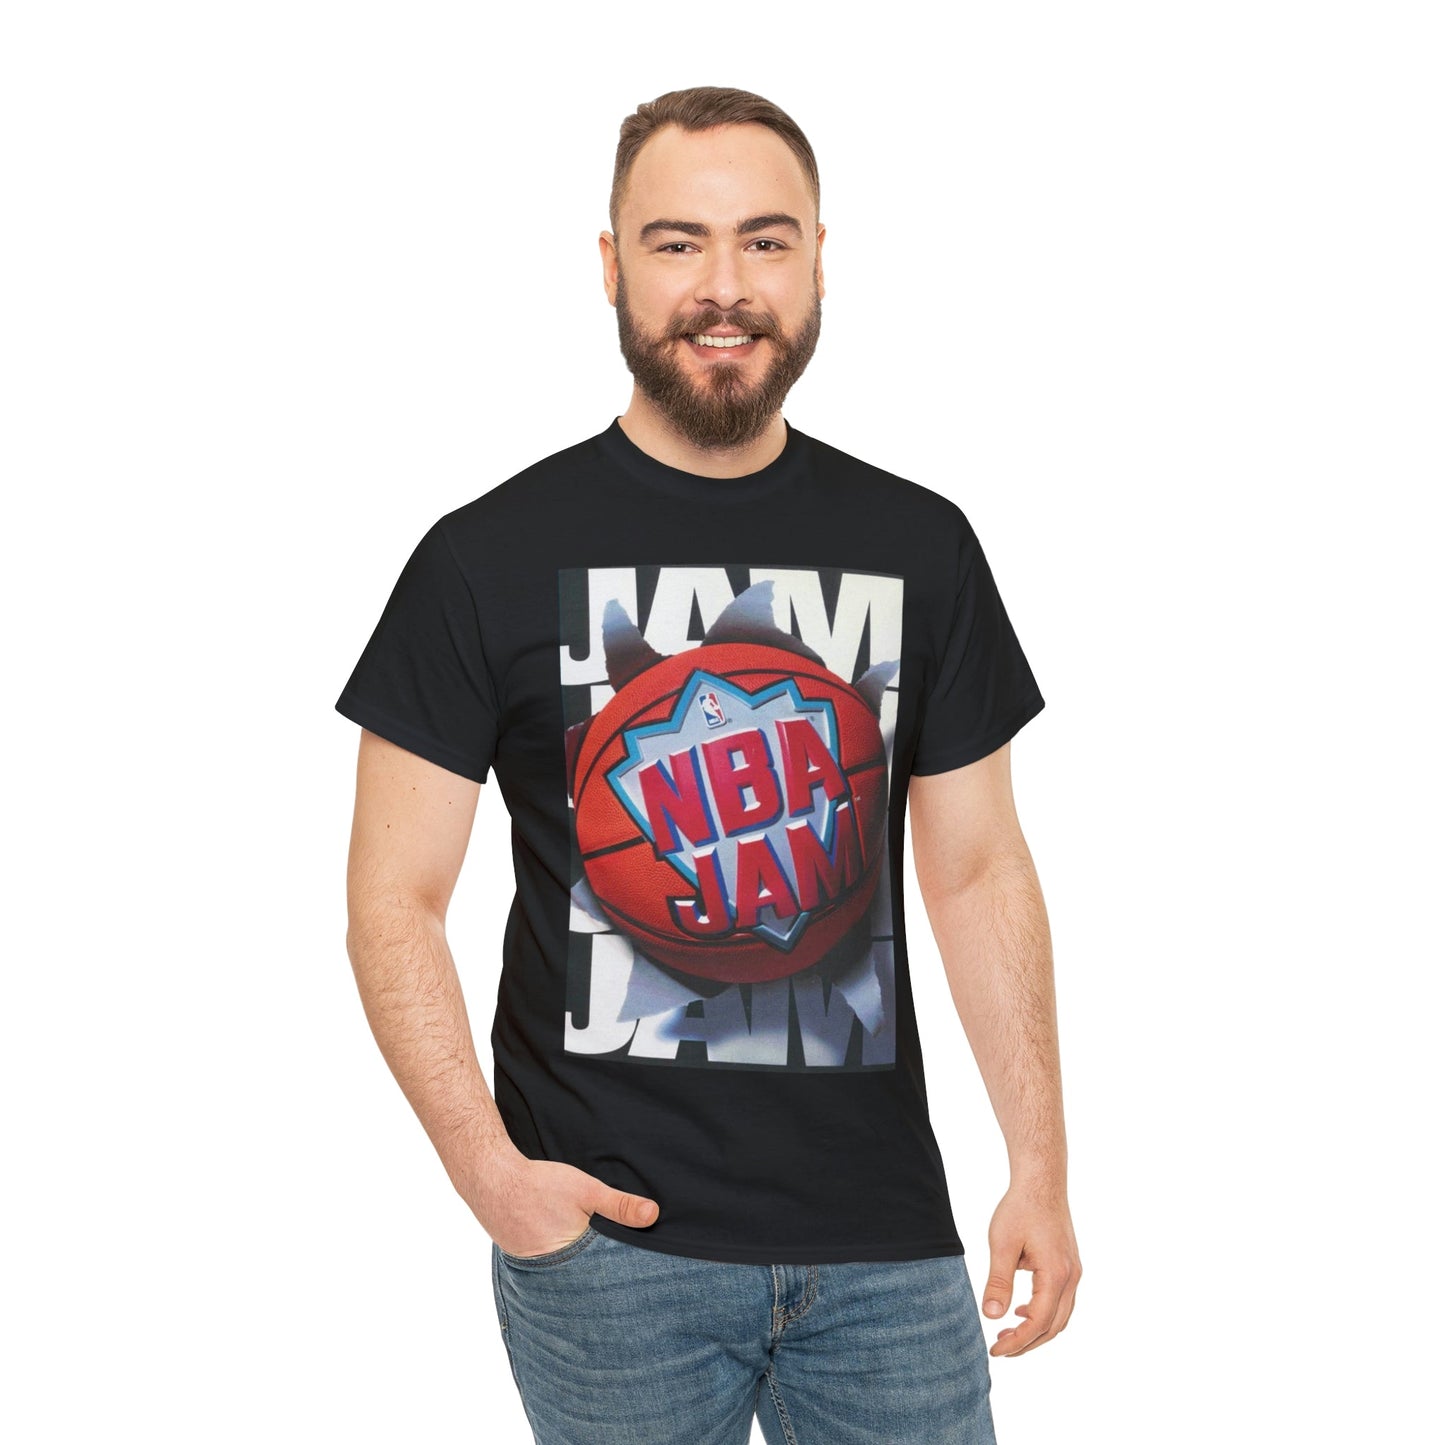 NBA Jam Arcade Video Game T-Shirt - RetroTeeShop